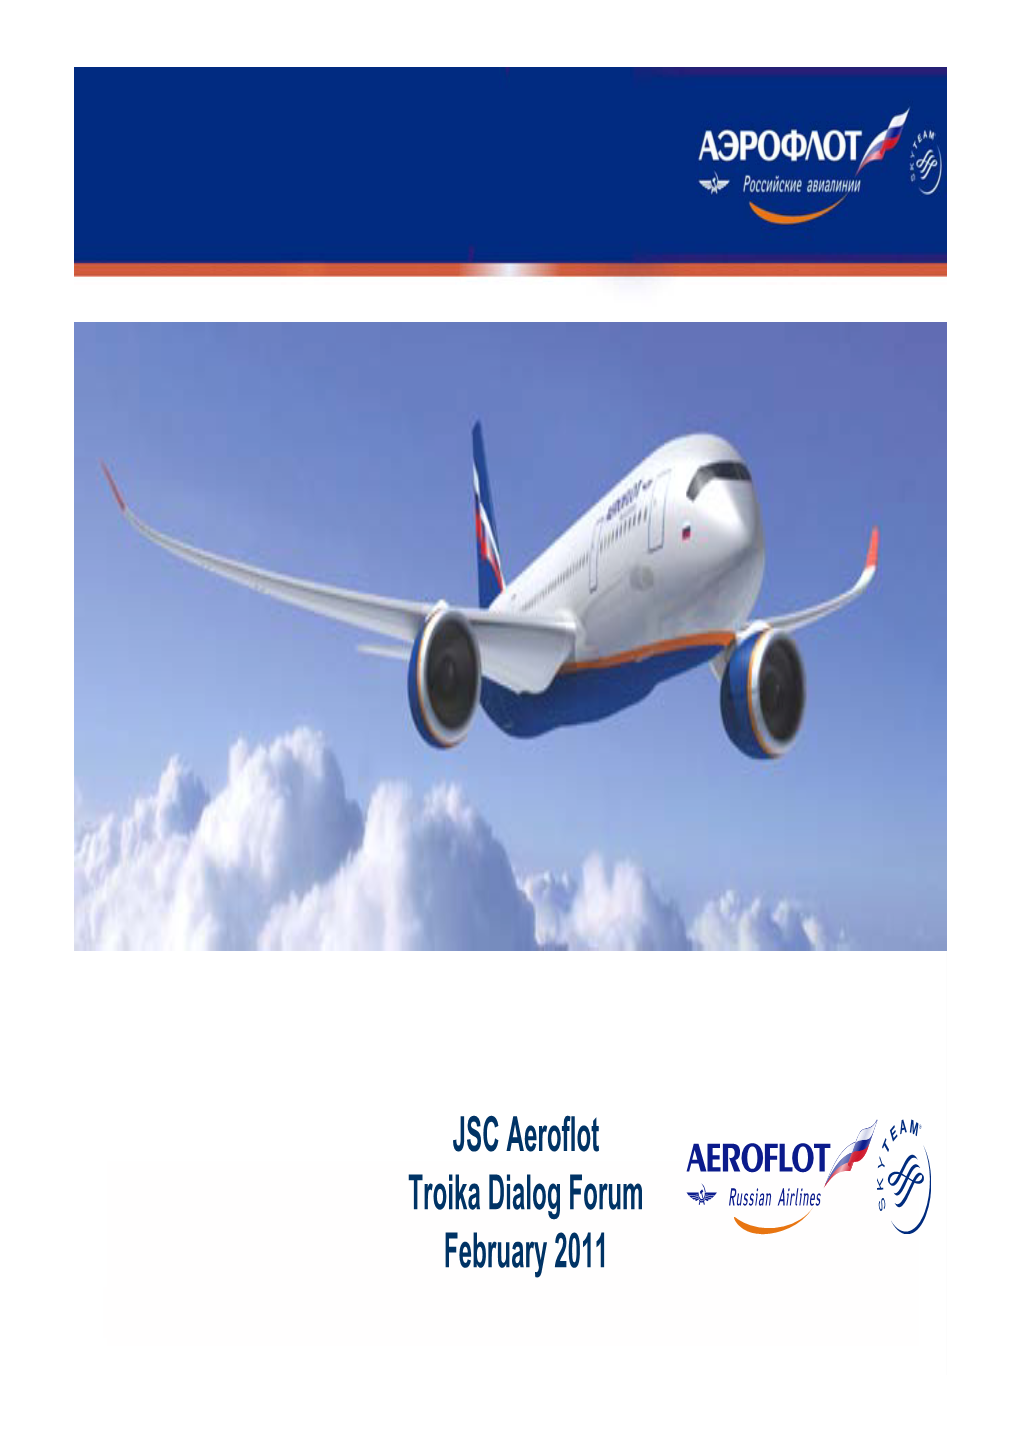 JSC Aeroflot Troika Dialog Forum February 2011